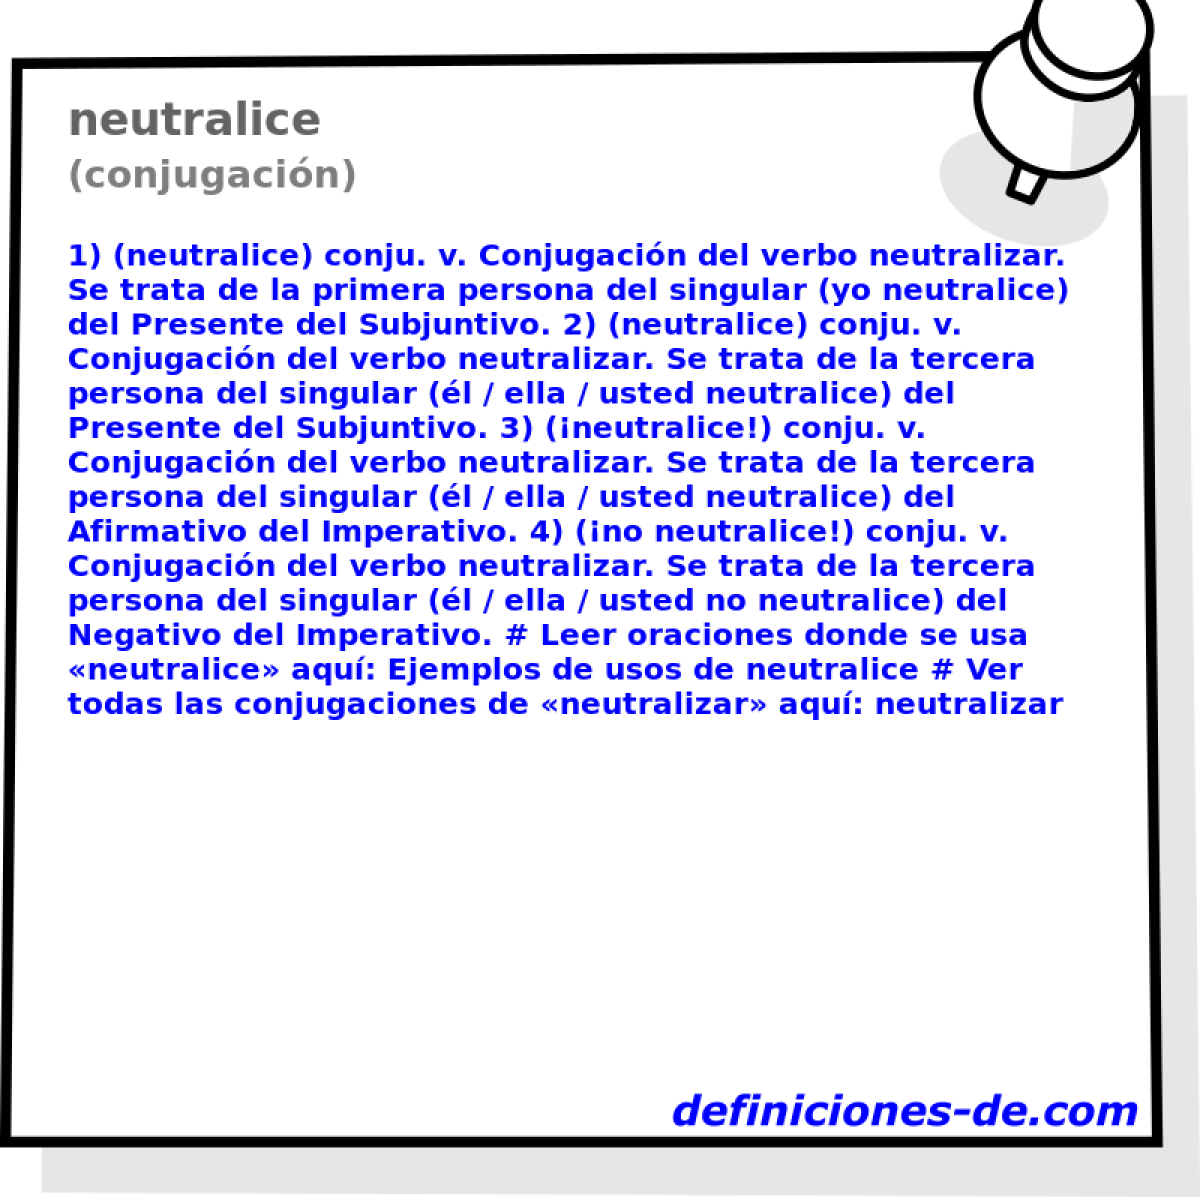 neutralice (conjugacin)